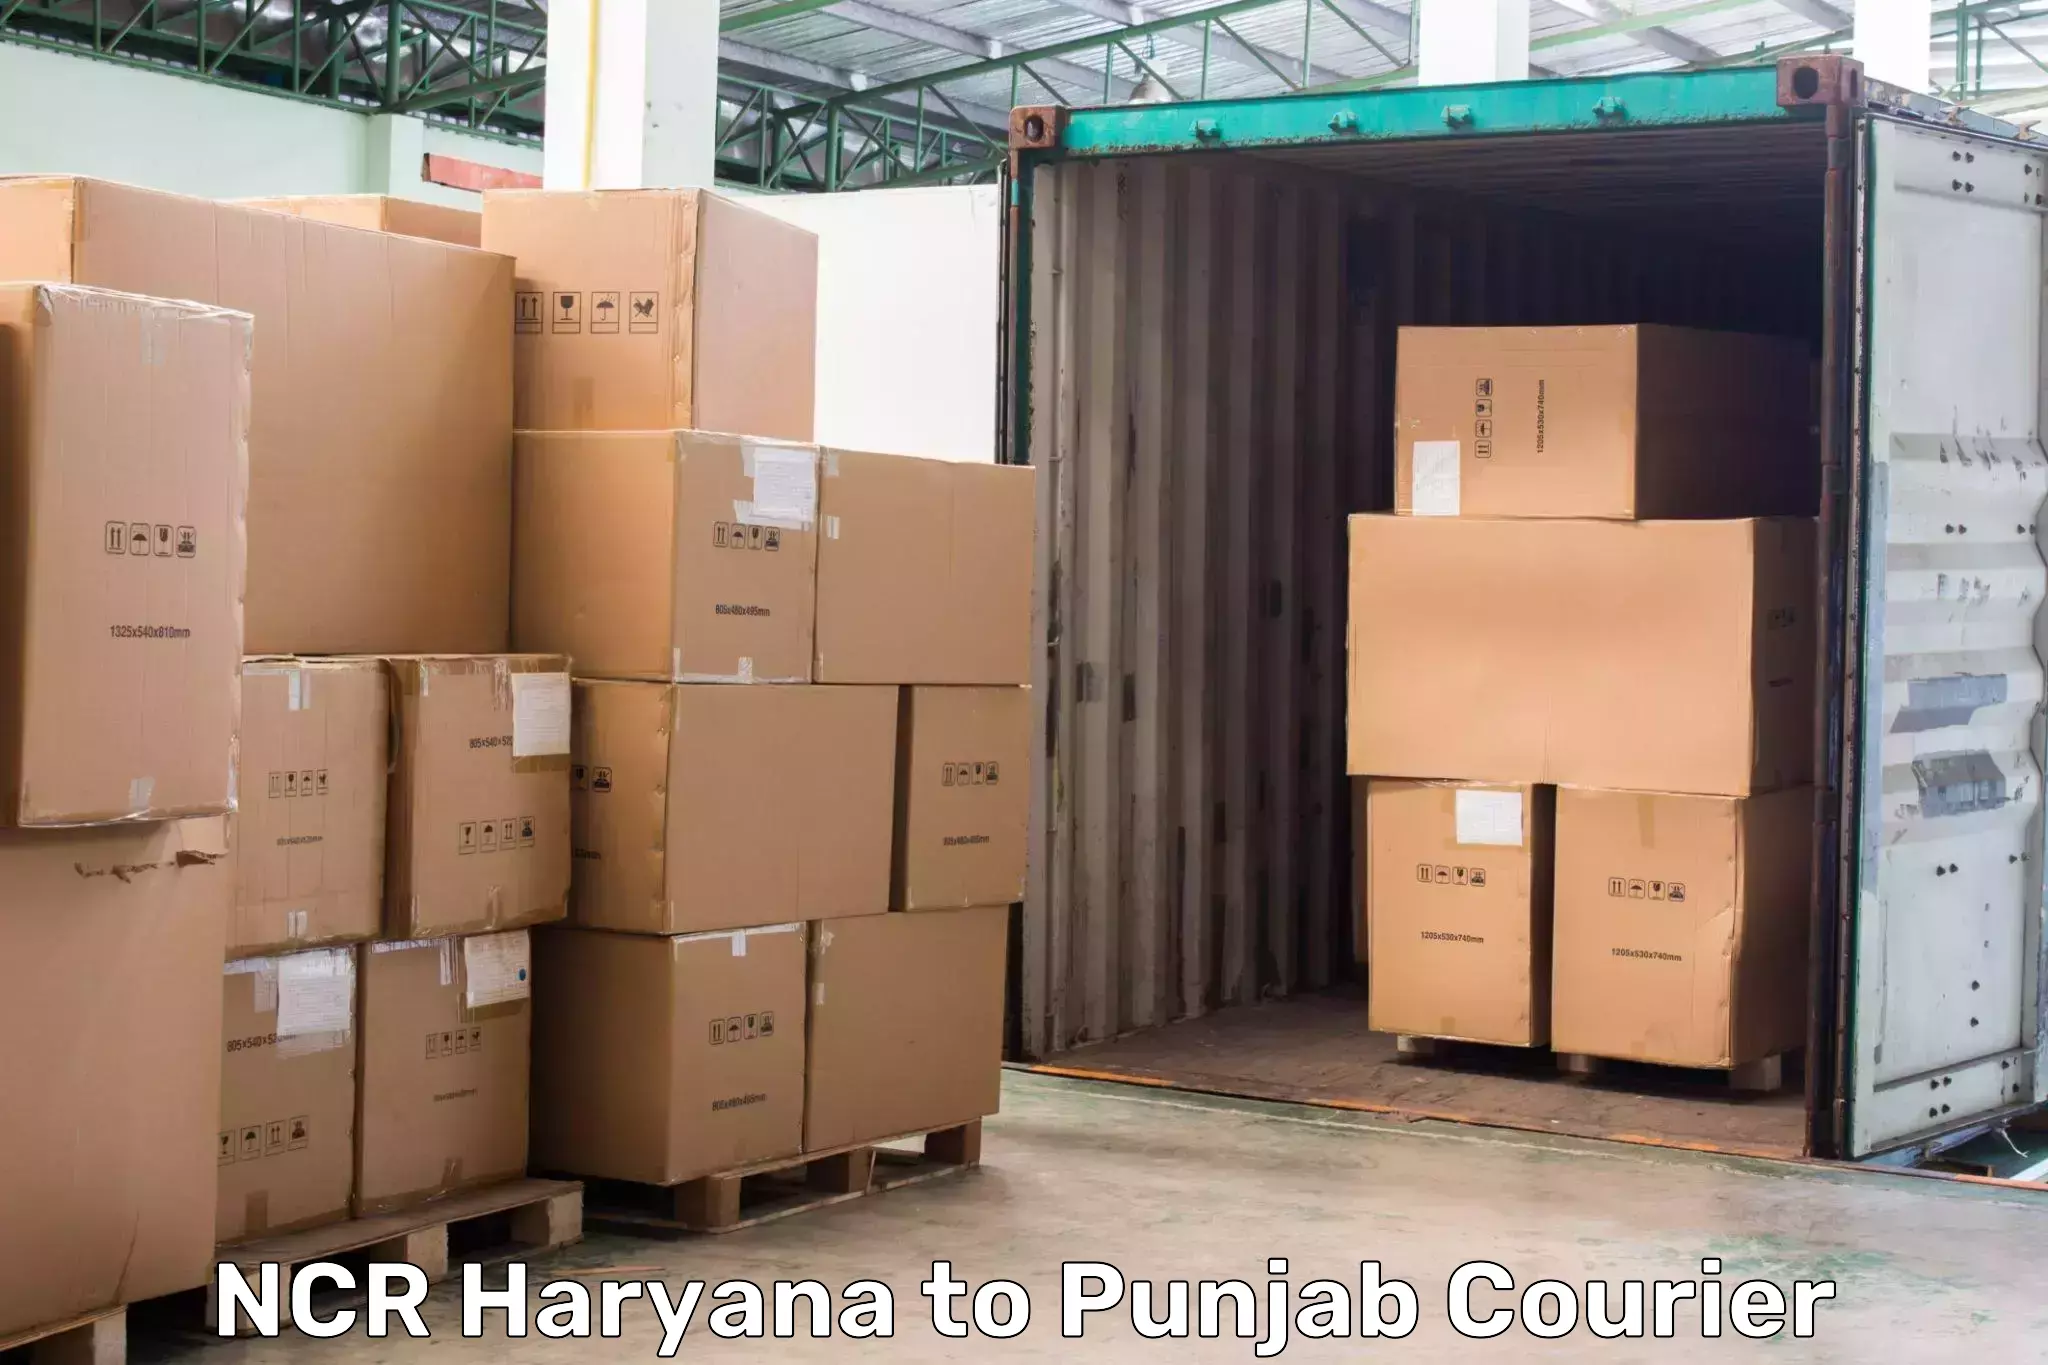 Punctual parcel services NCR Haryana to Jalandhar